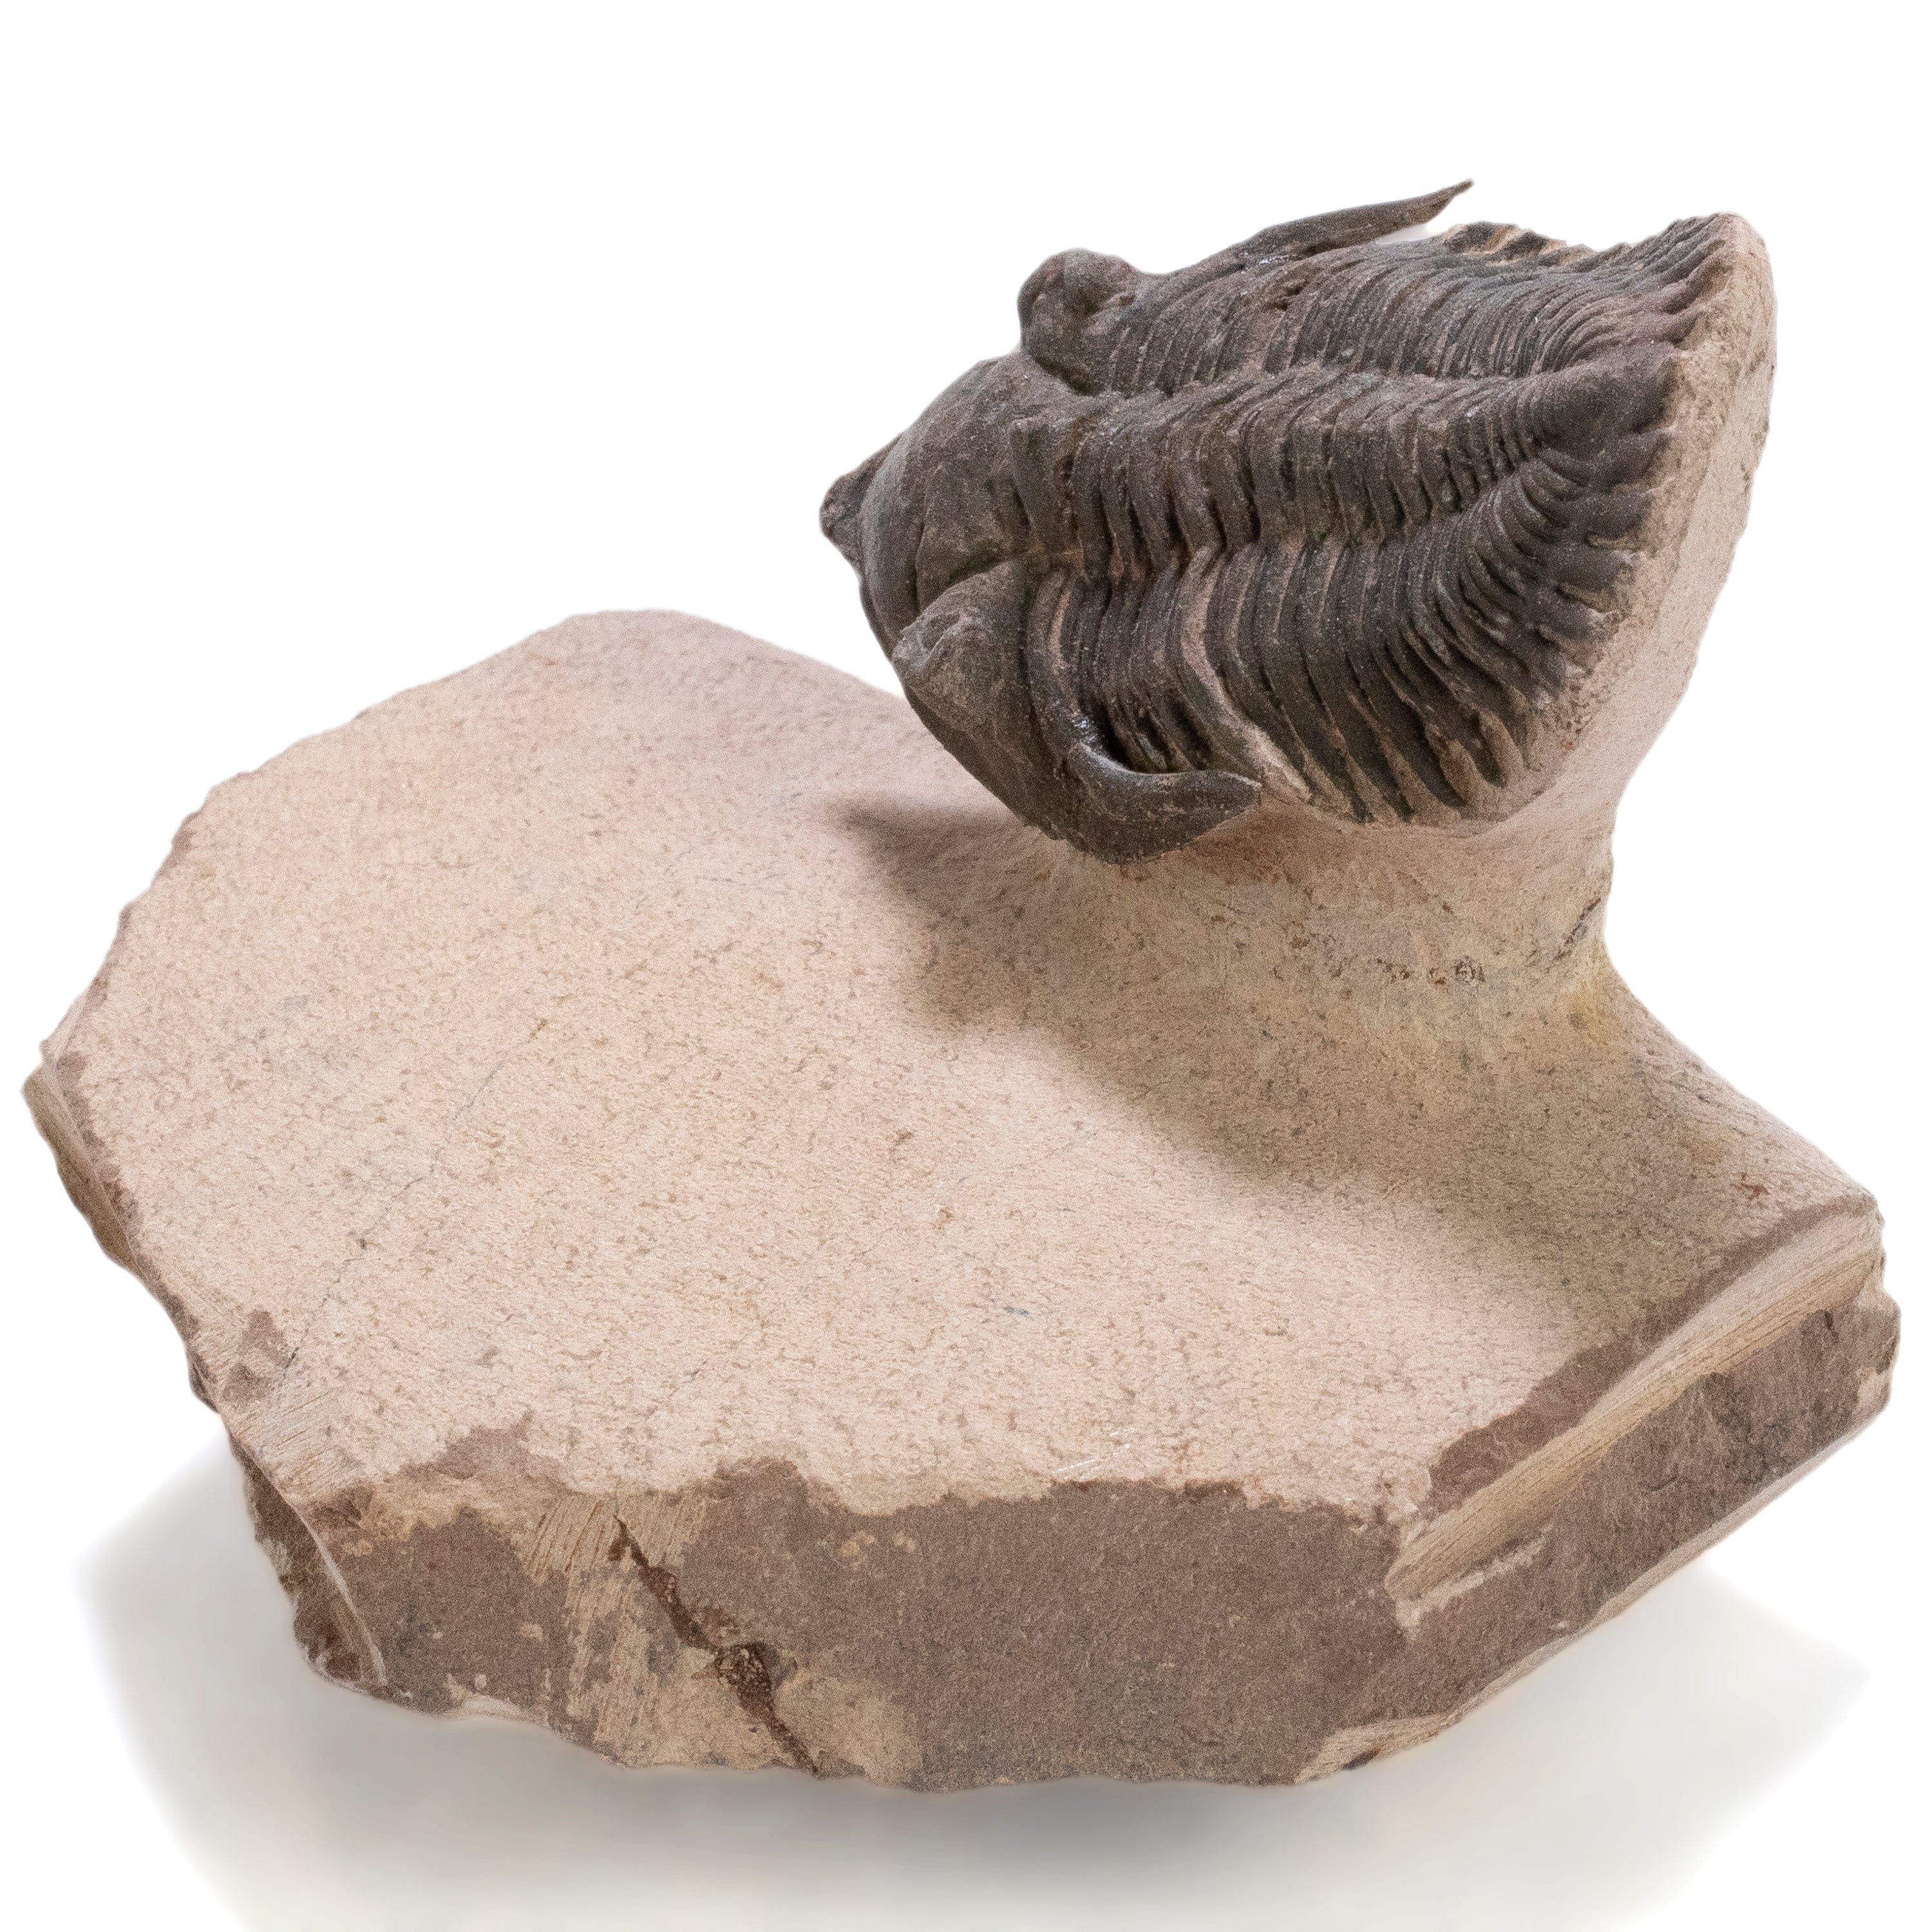 Kalifano Fossils & Minerals Metacanthina Issoumourensis Trilobite on Matrix from Atchana, Morocco - 1.9" TR3000.026